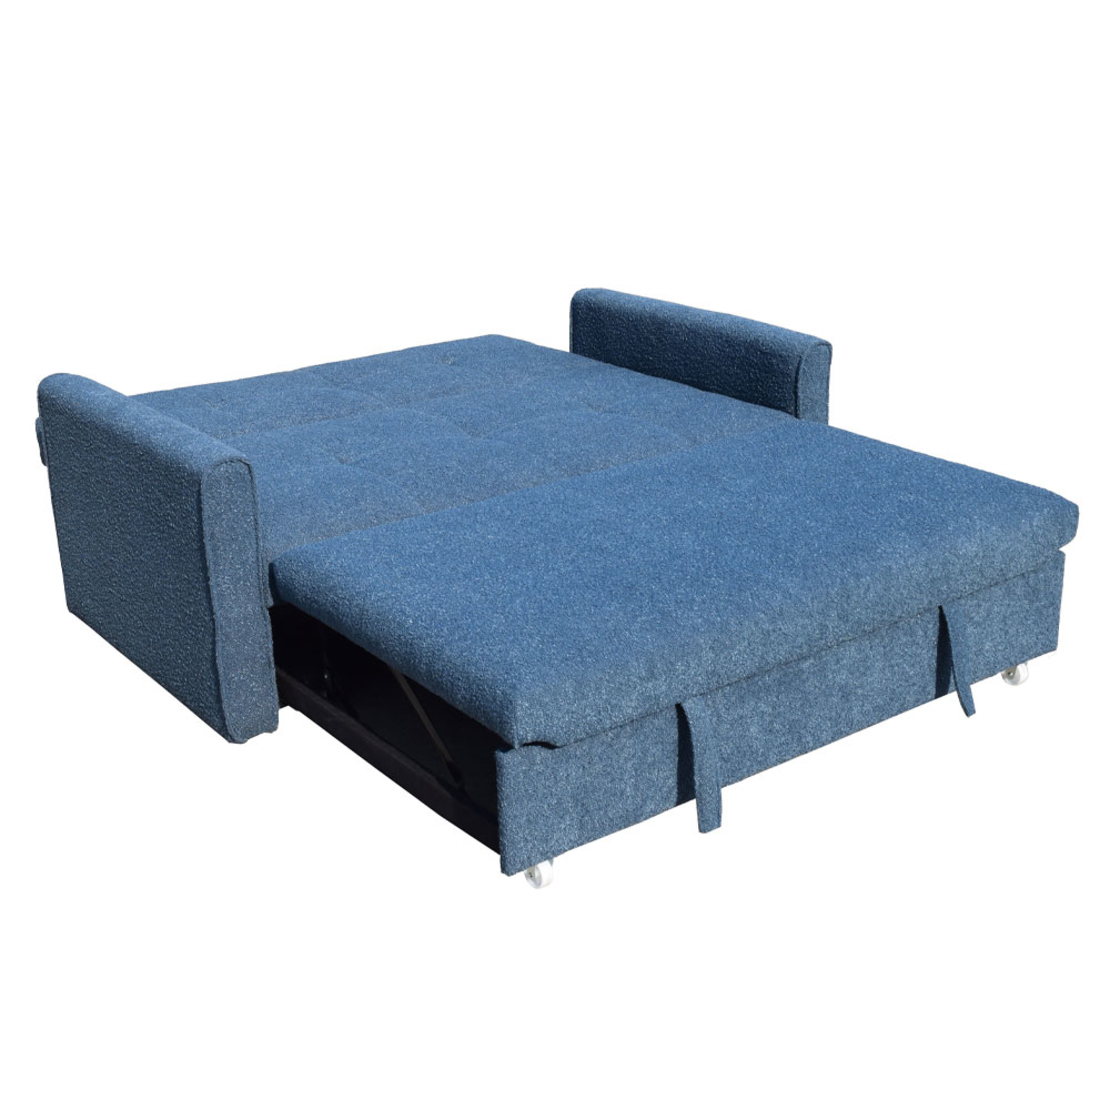 DUAL SOFA BED 2SEAT CURLY BLUE E1 PRC